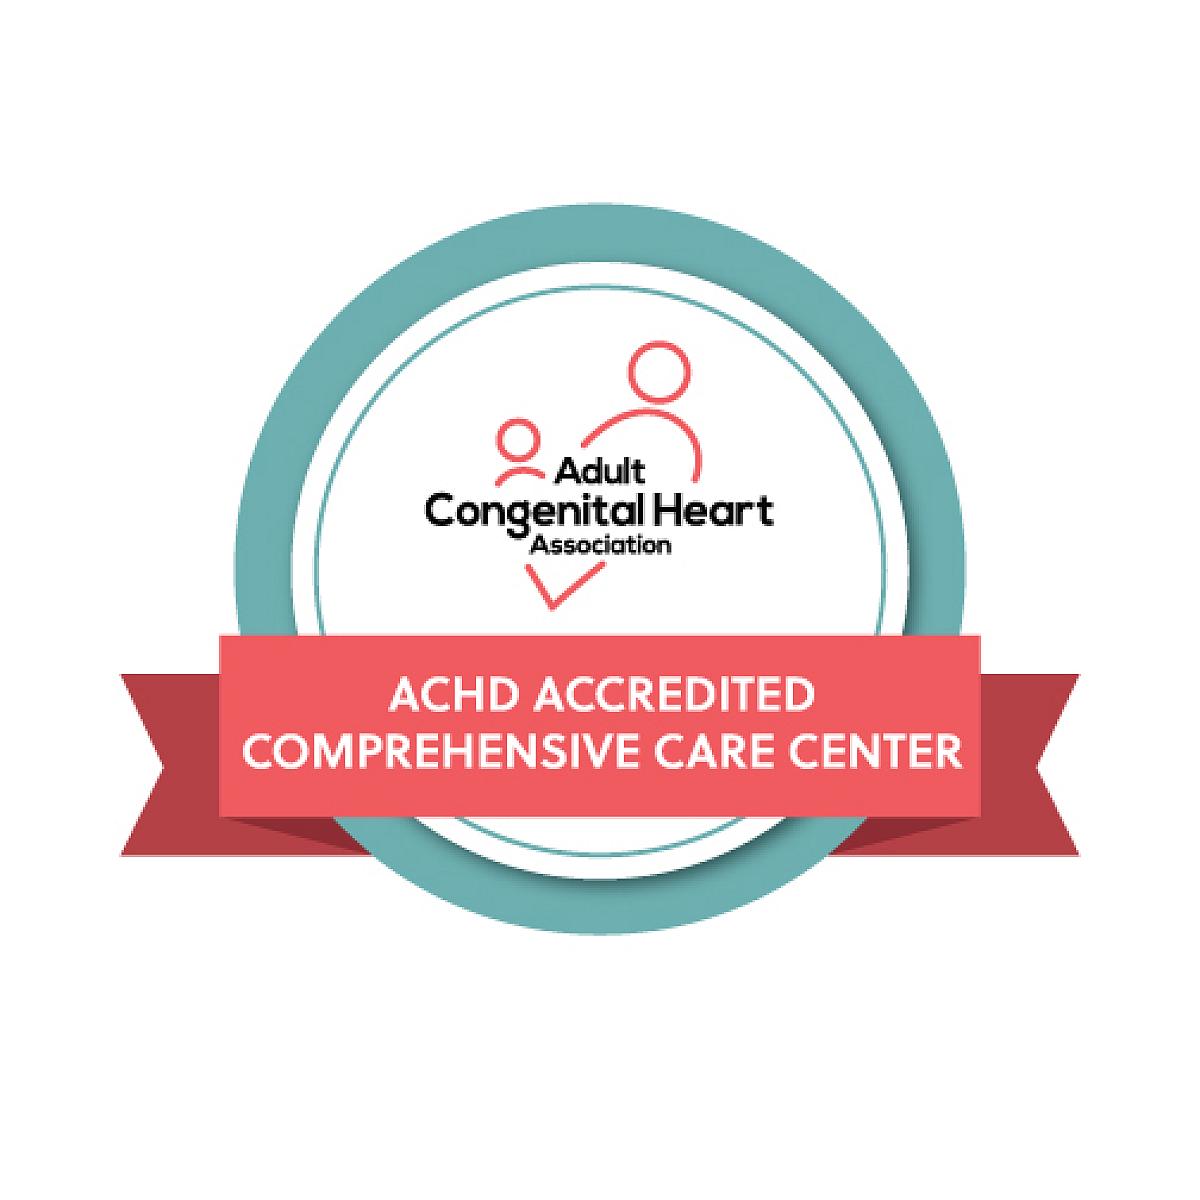 ACHA Accredited Comprehensive Care Center certification logo